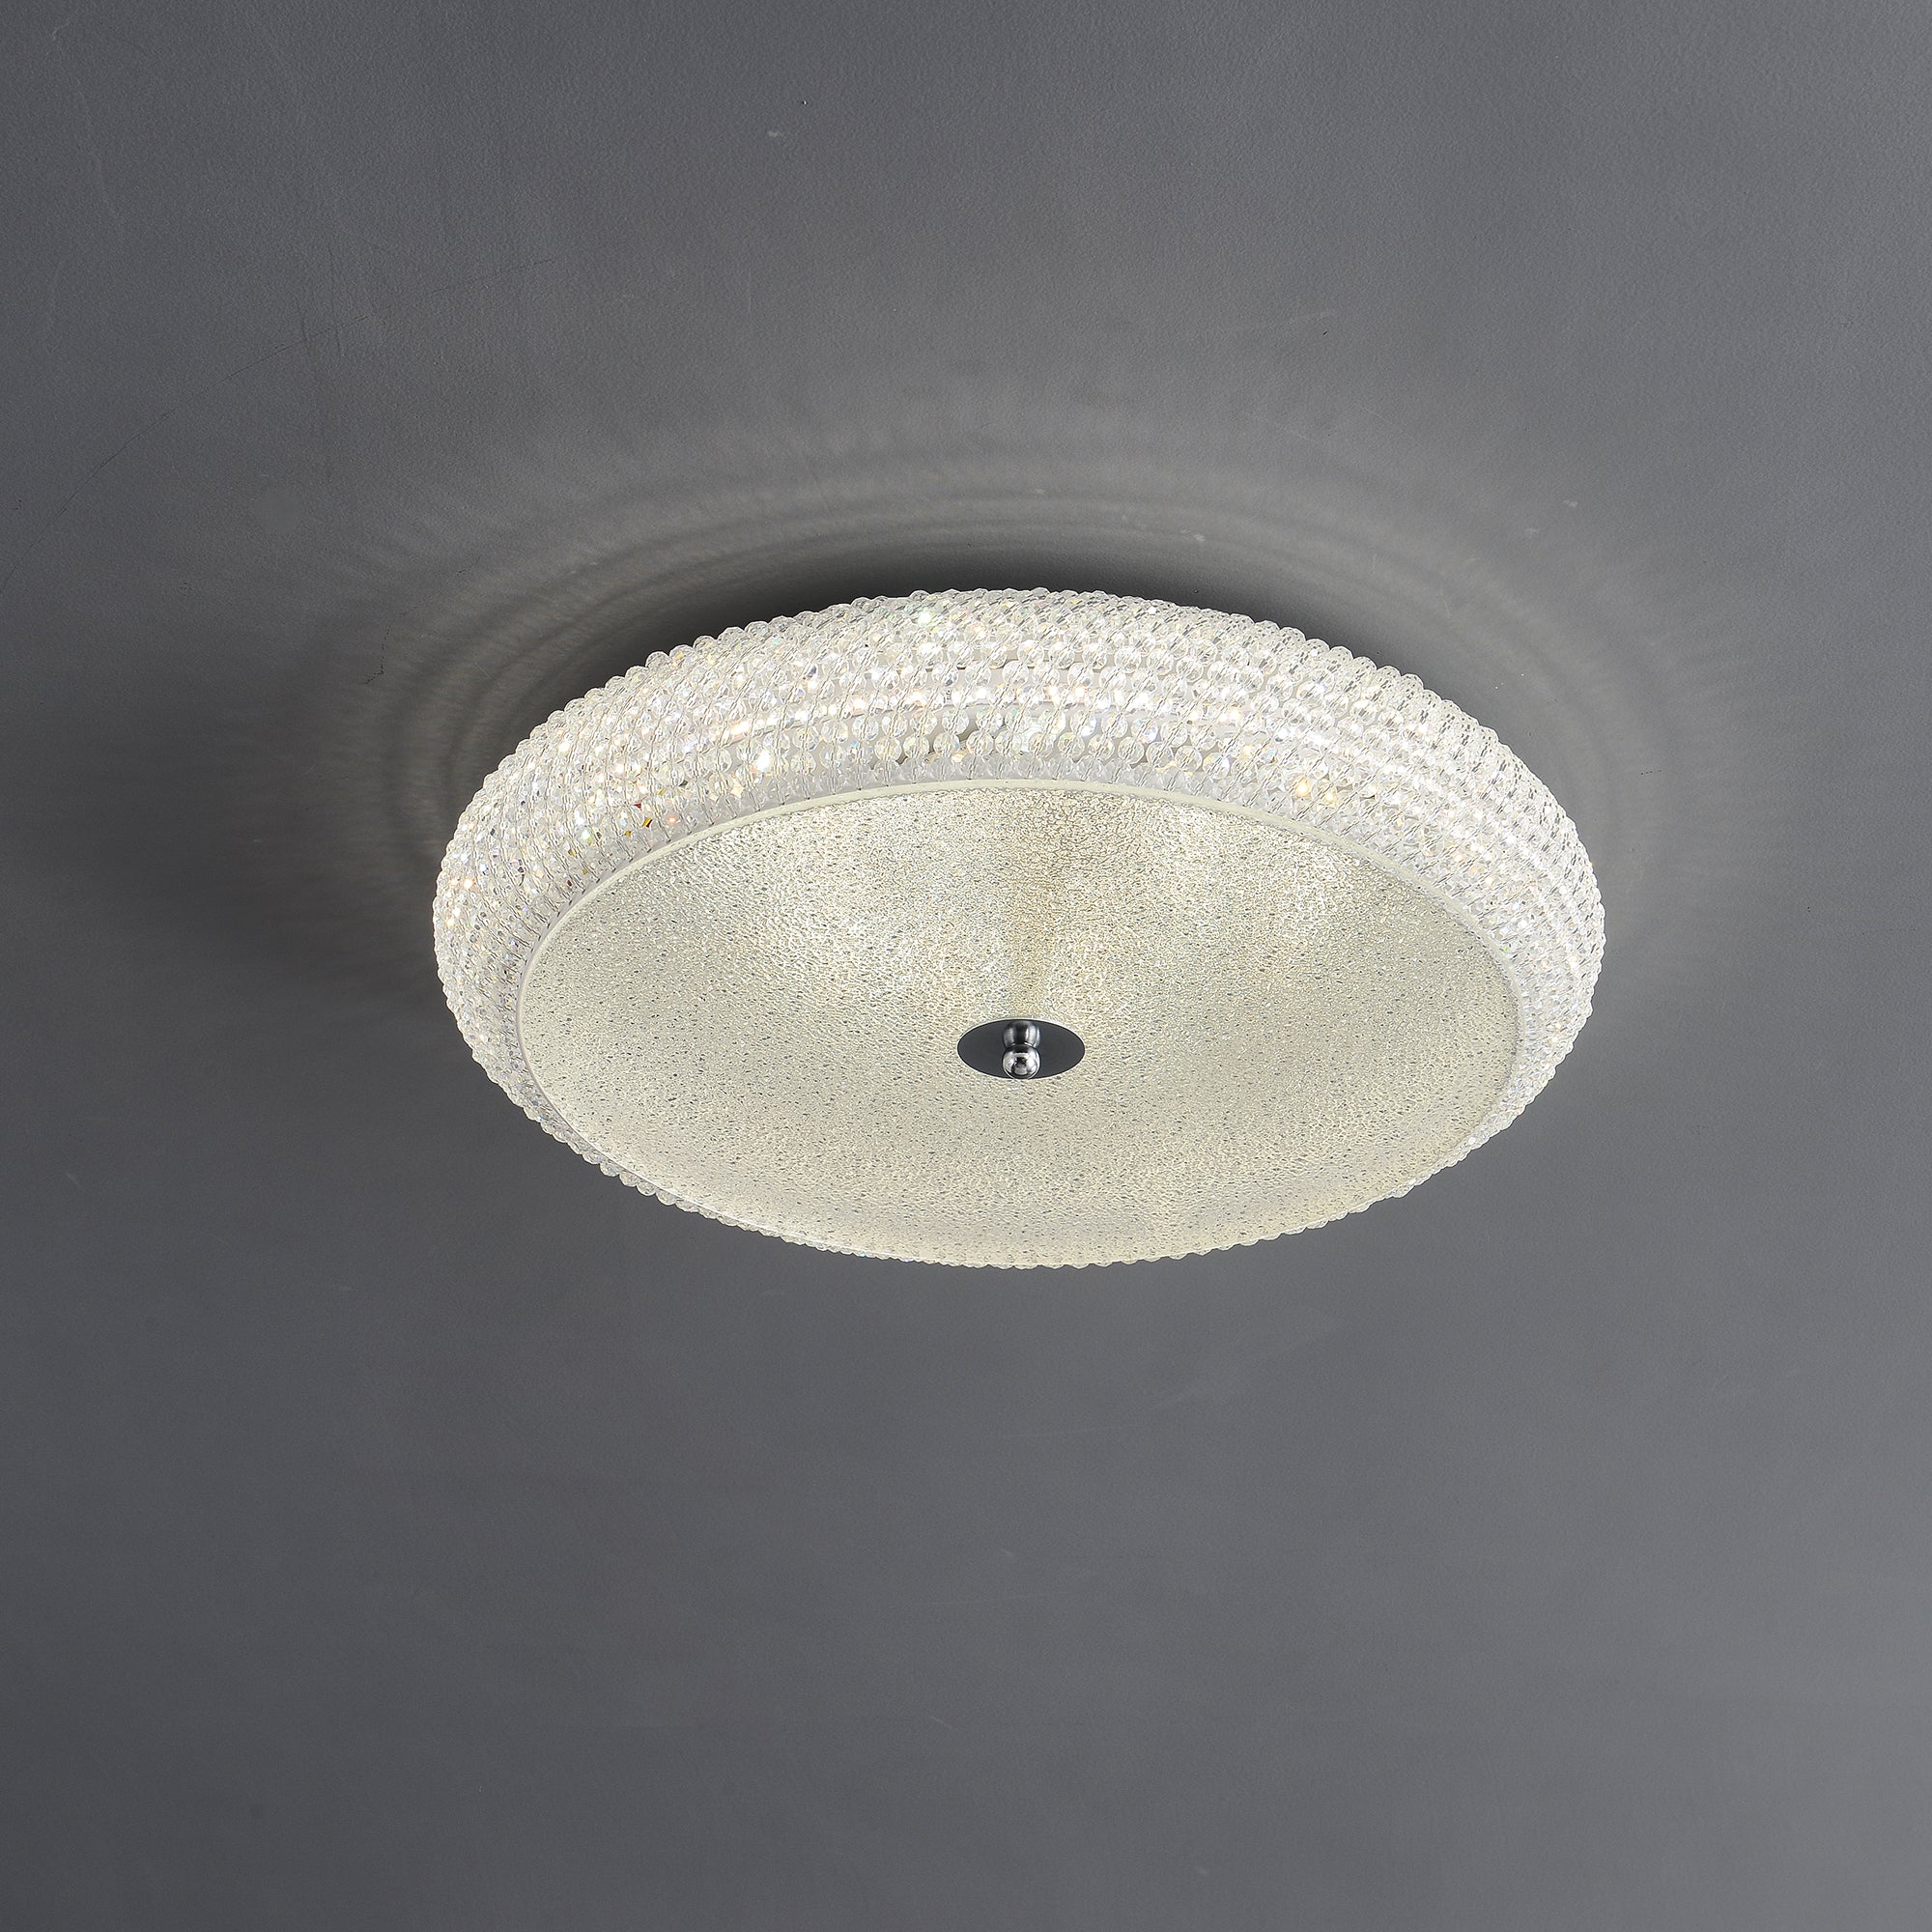 Kyrie Crystal Ceiling Lamp